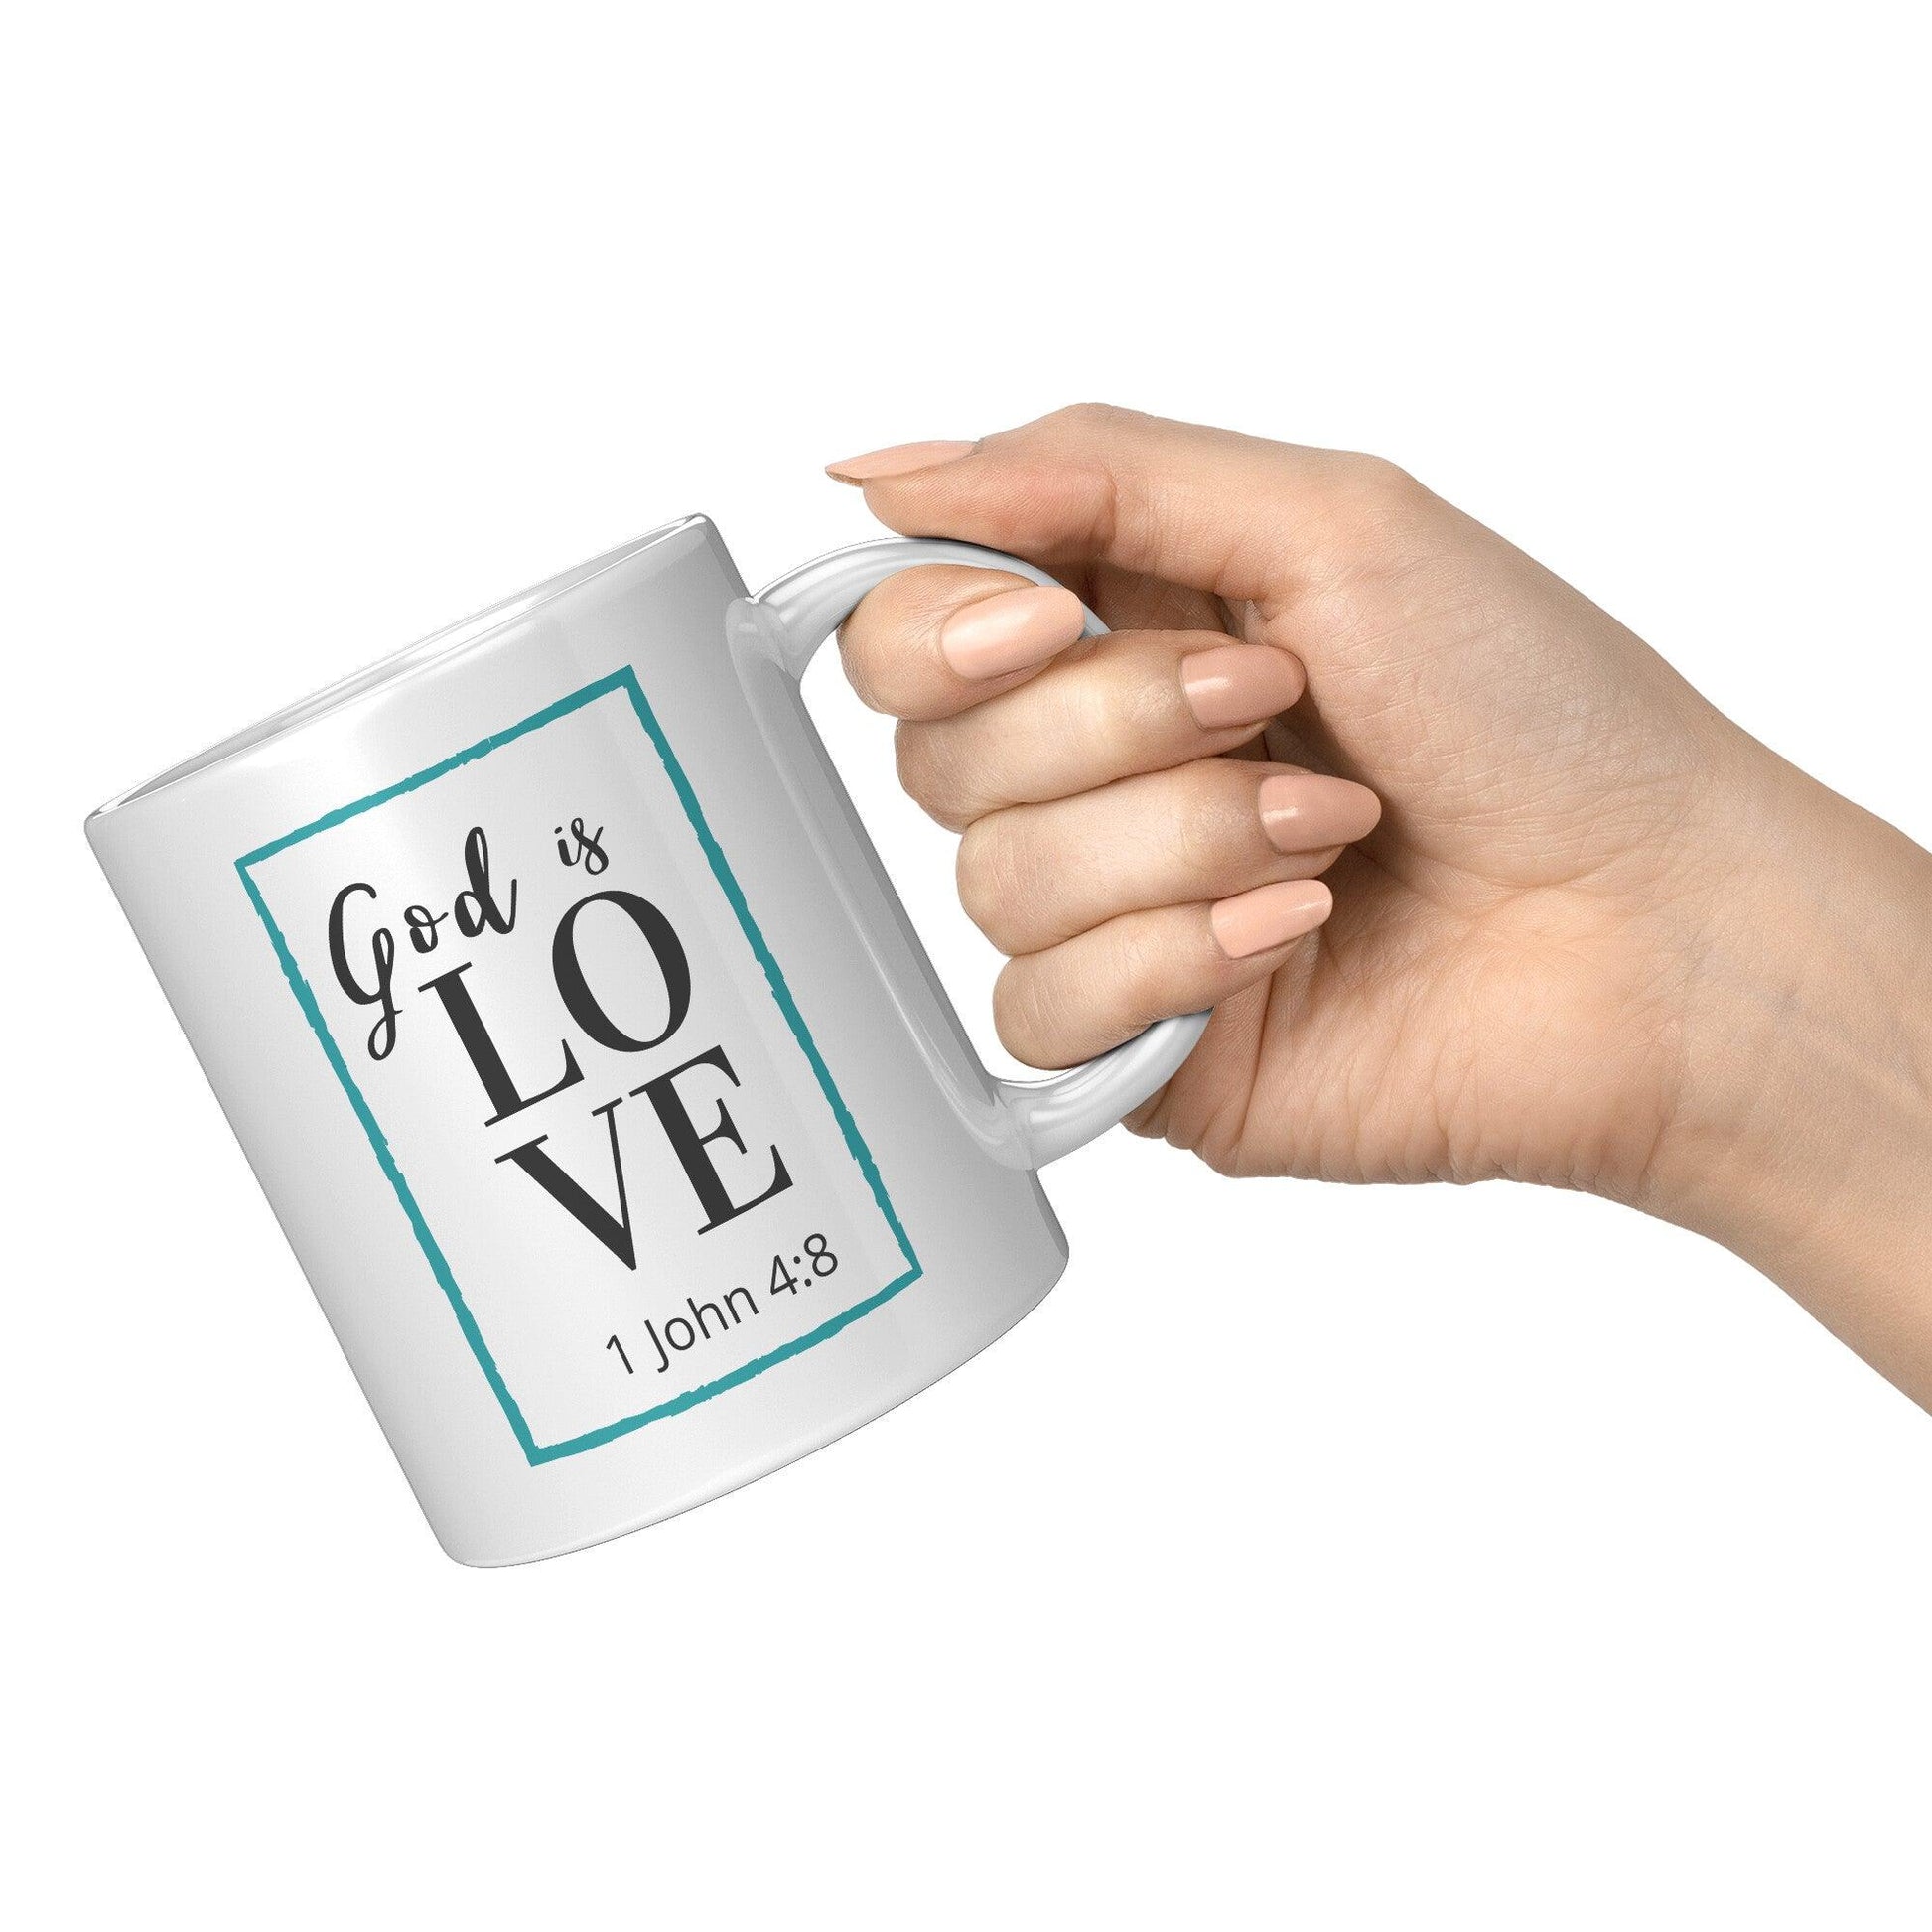 God is Love 1 John 4:8 White Mug - TheGivenGet